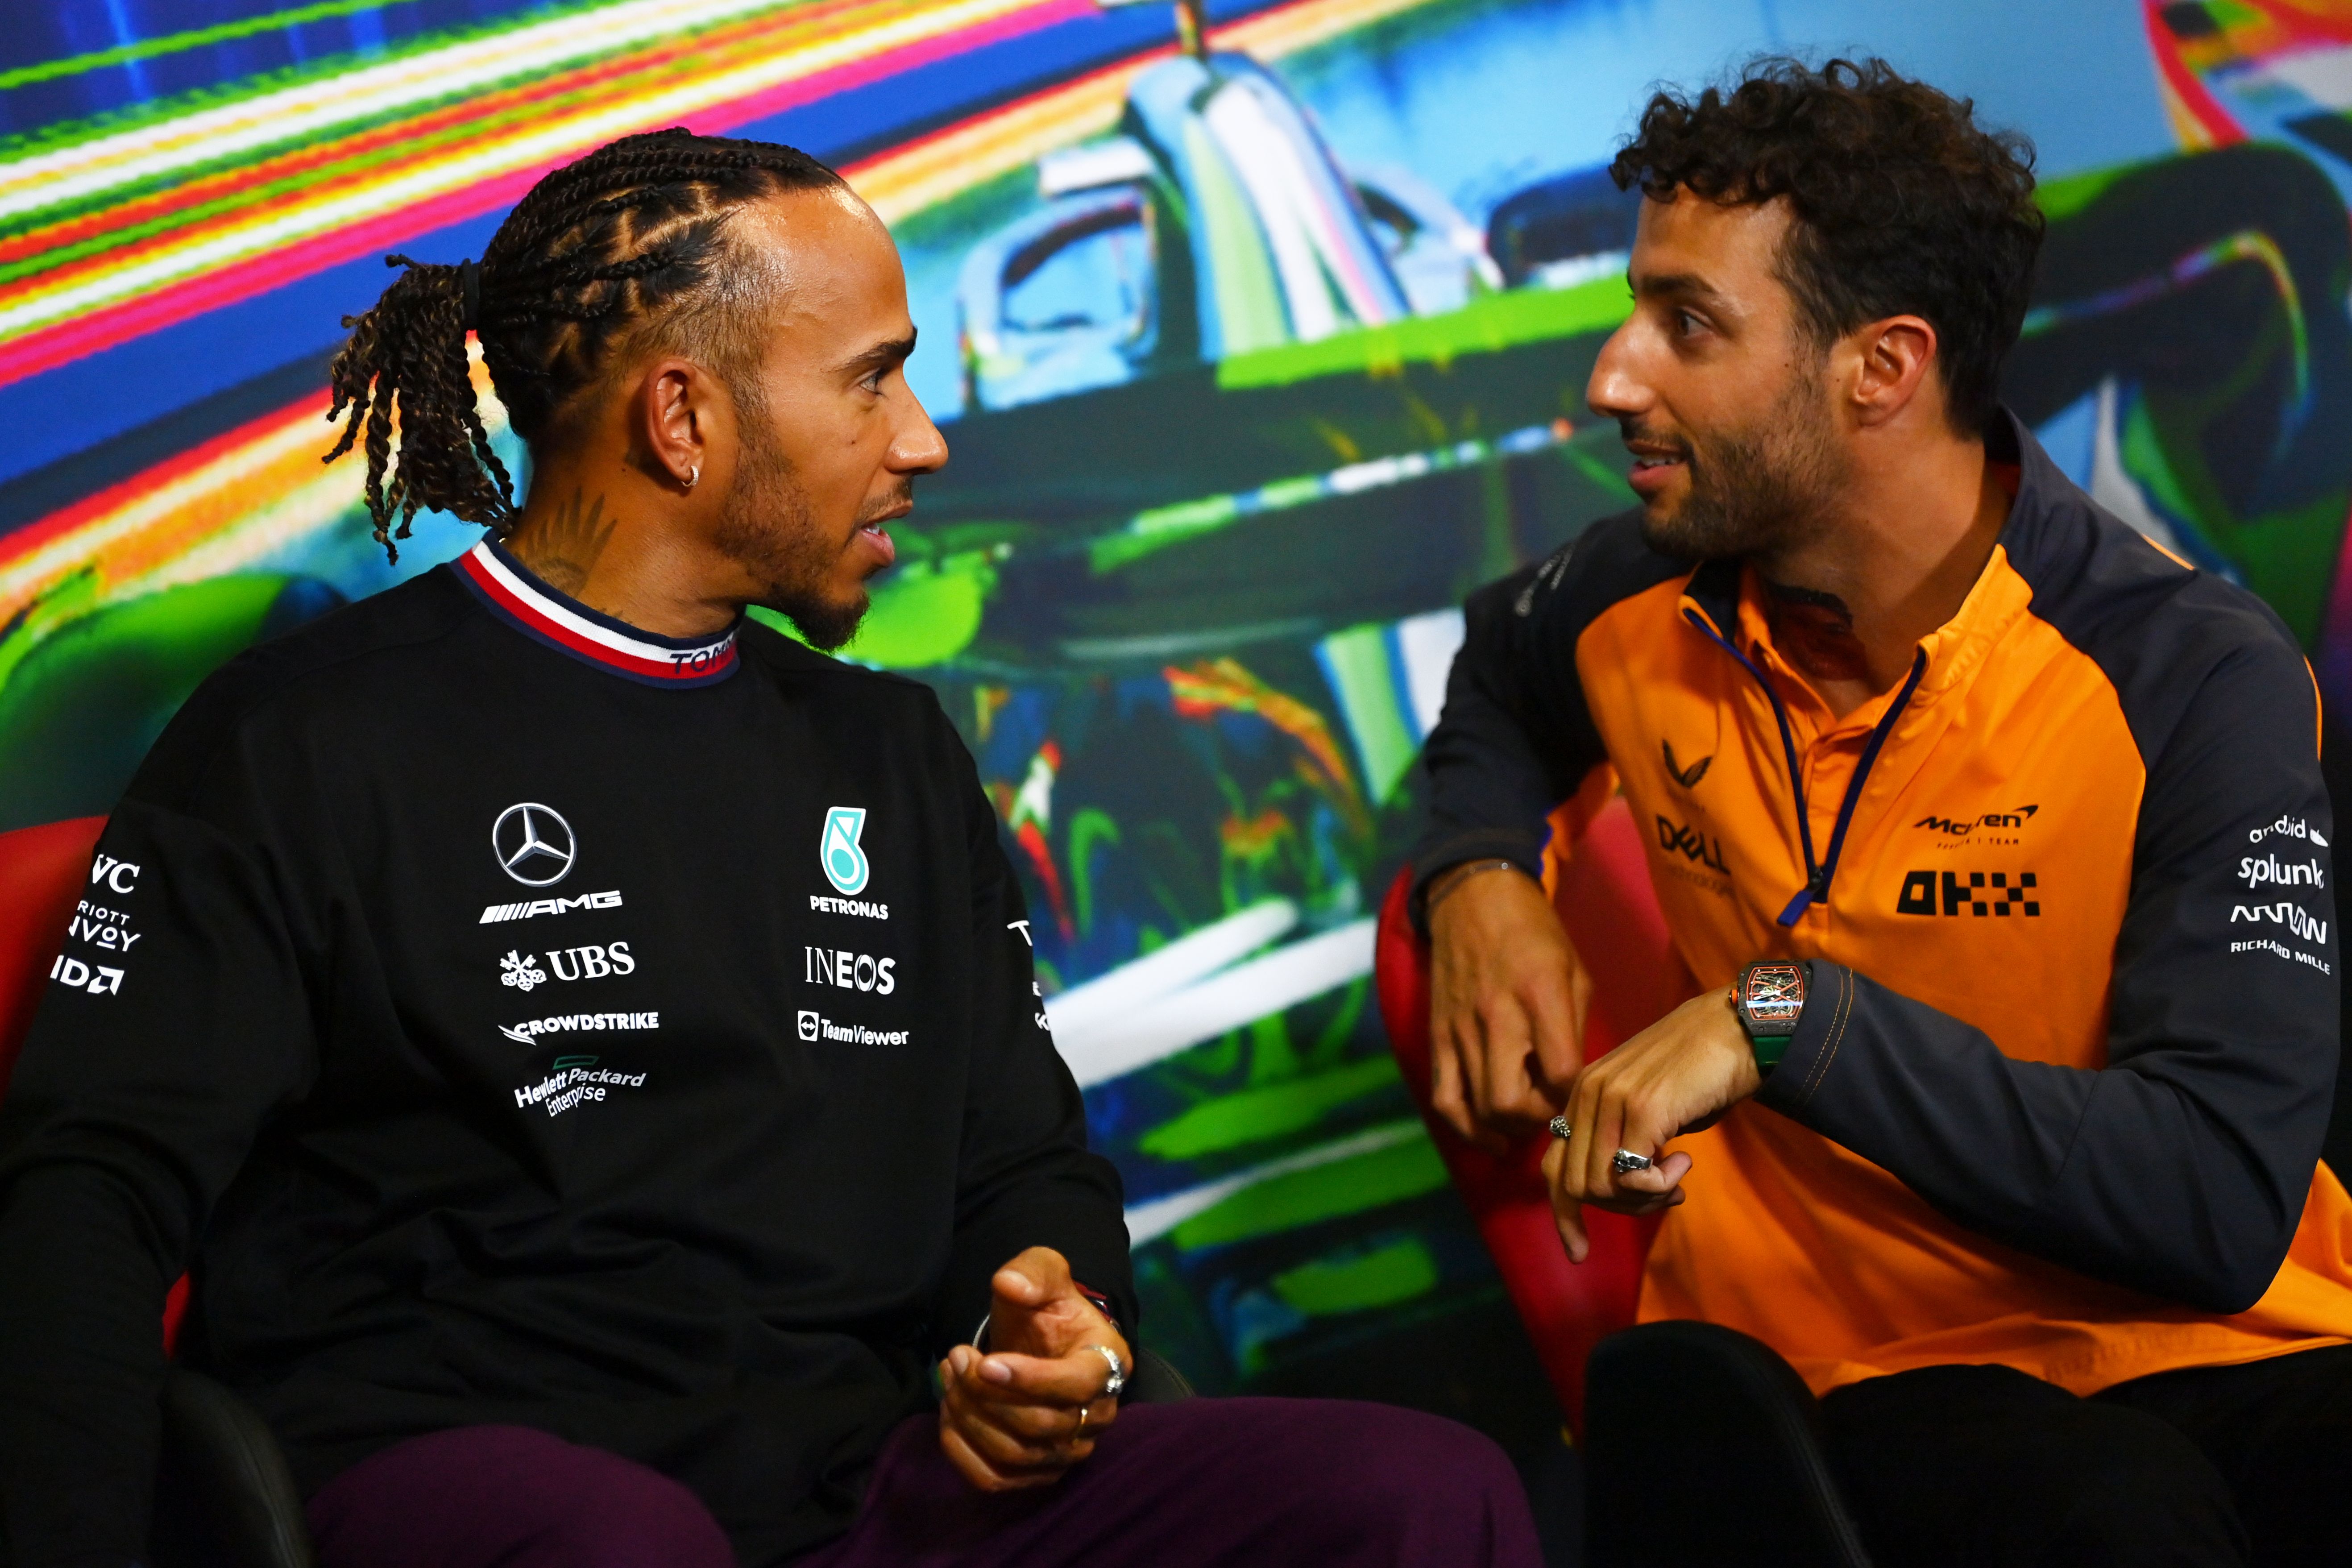 Lewis Hamilton &amp; Daniel Ricciardo chat at the Italian GP